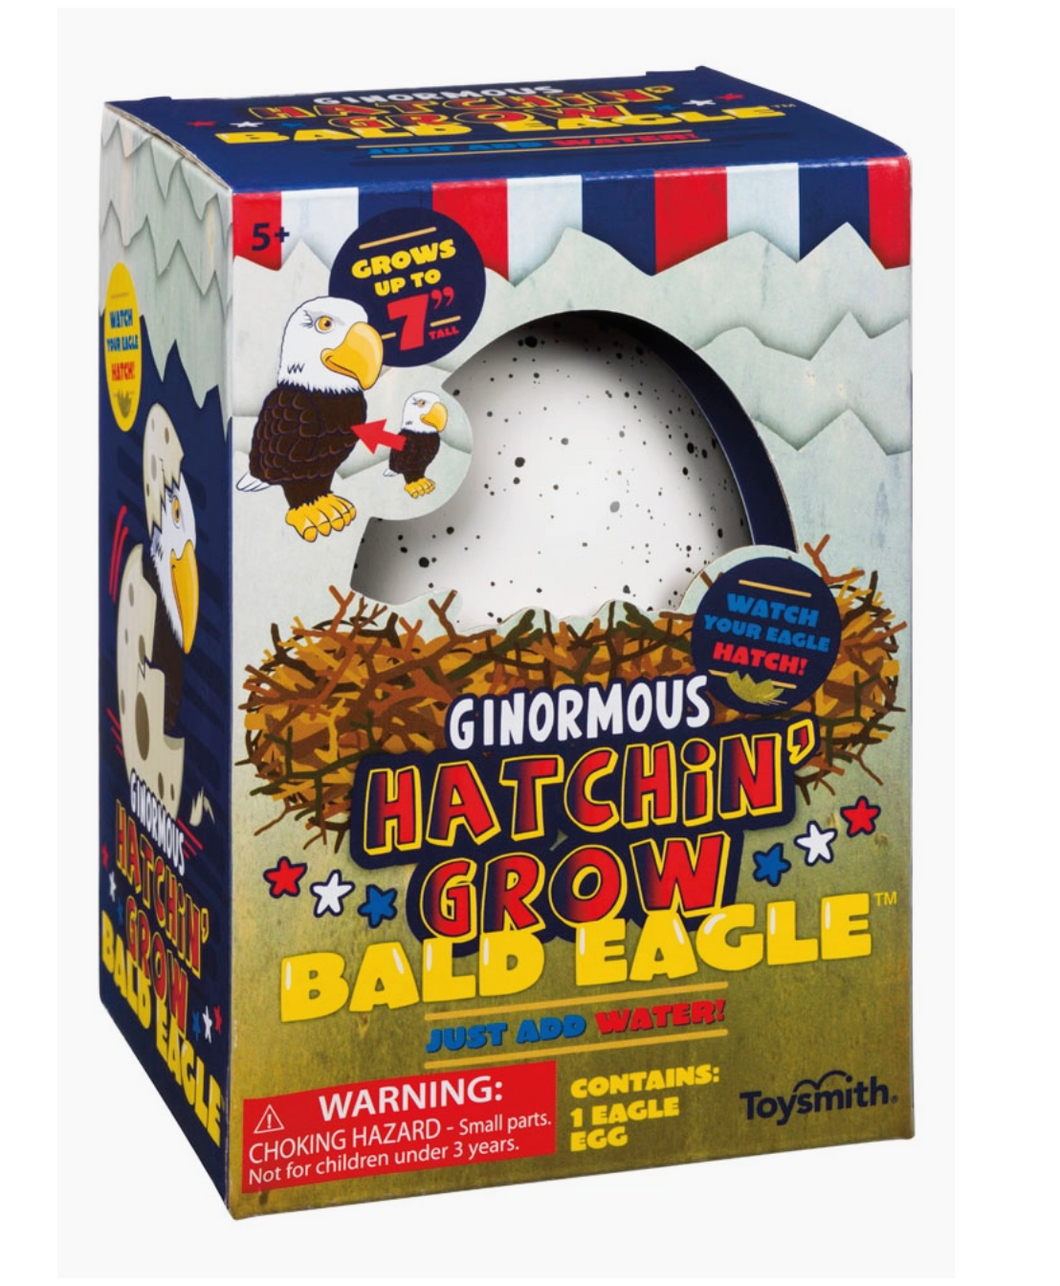 Ginormous Hatchin' Grow Bald Eagle